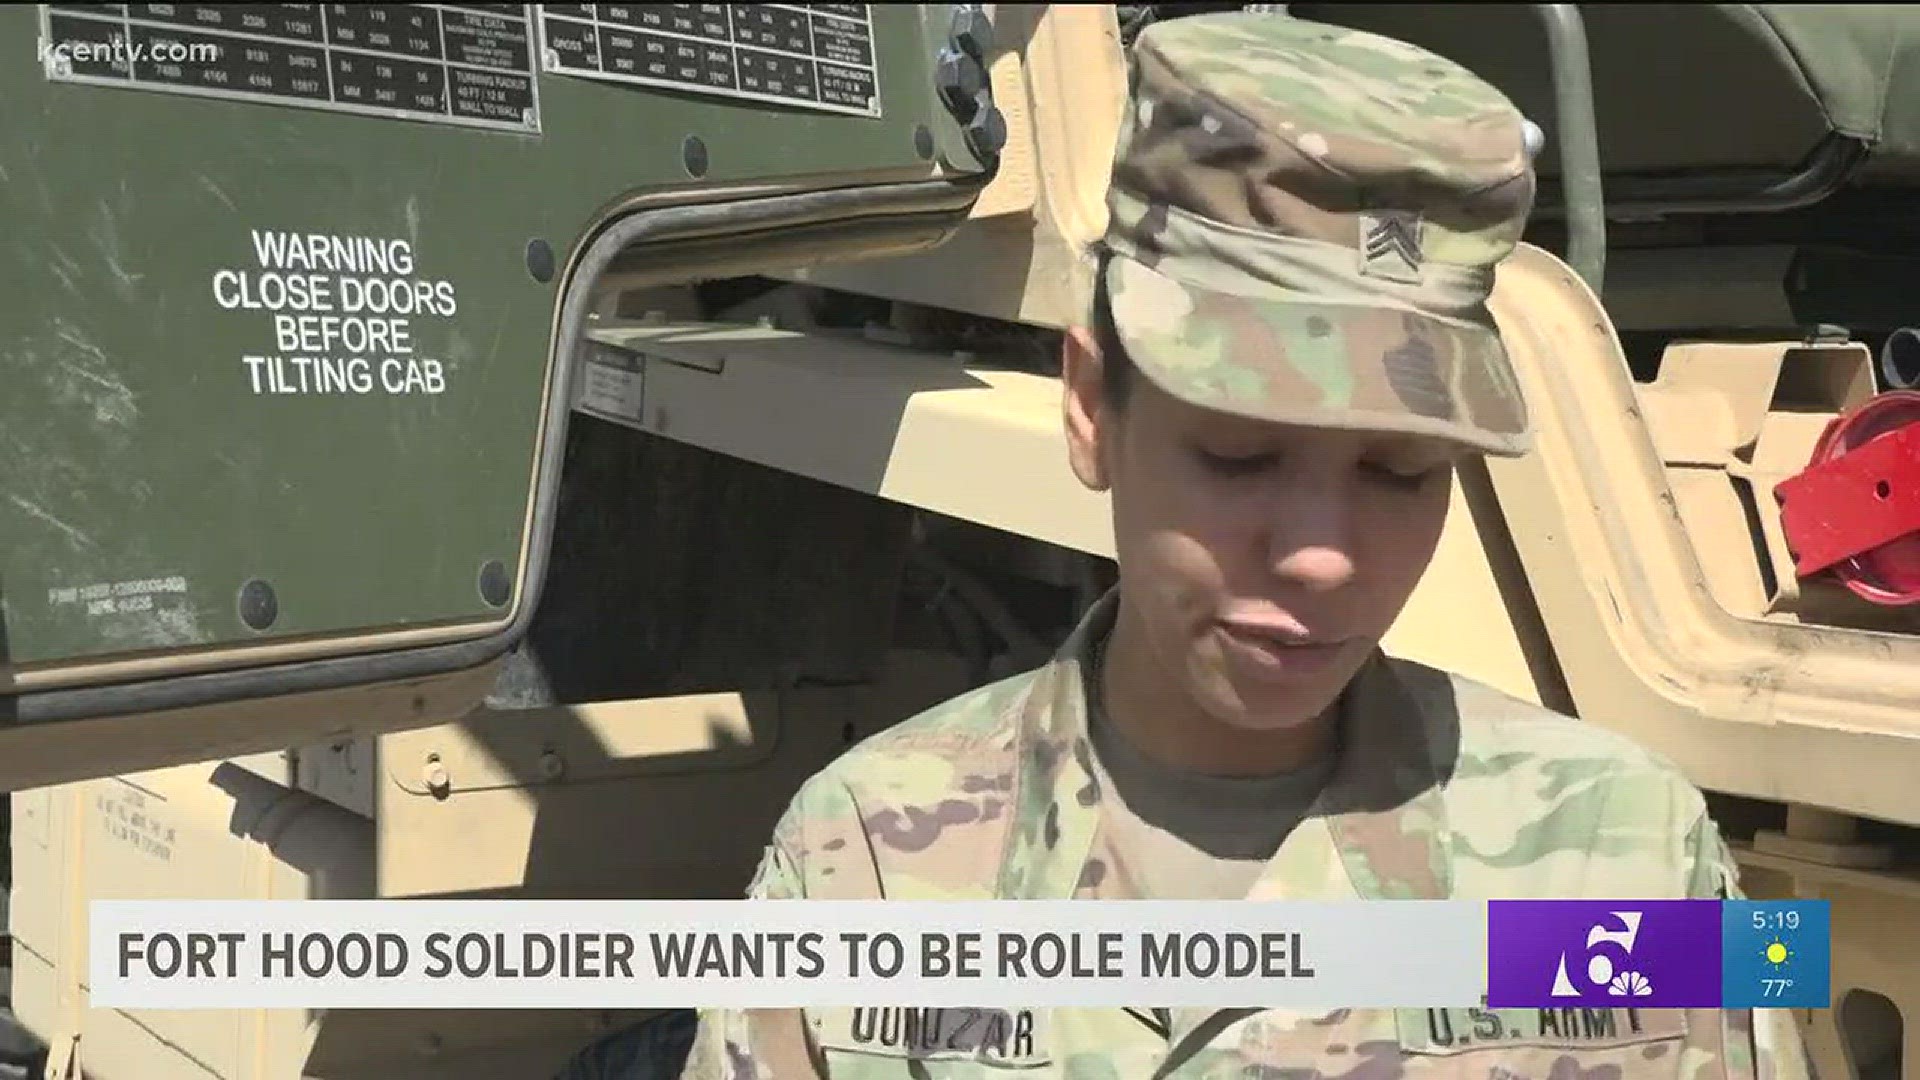 Channel 6 Military Reporter Jillian Angeline reports.